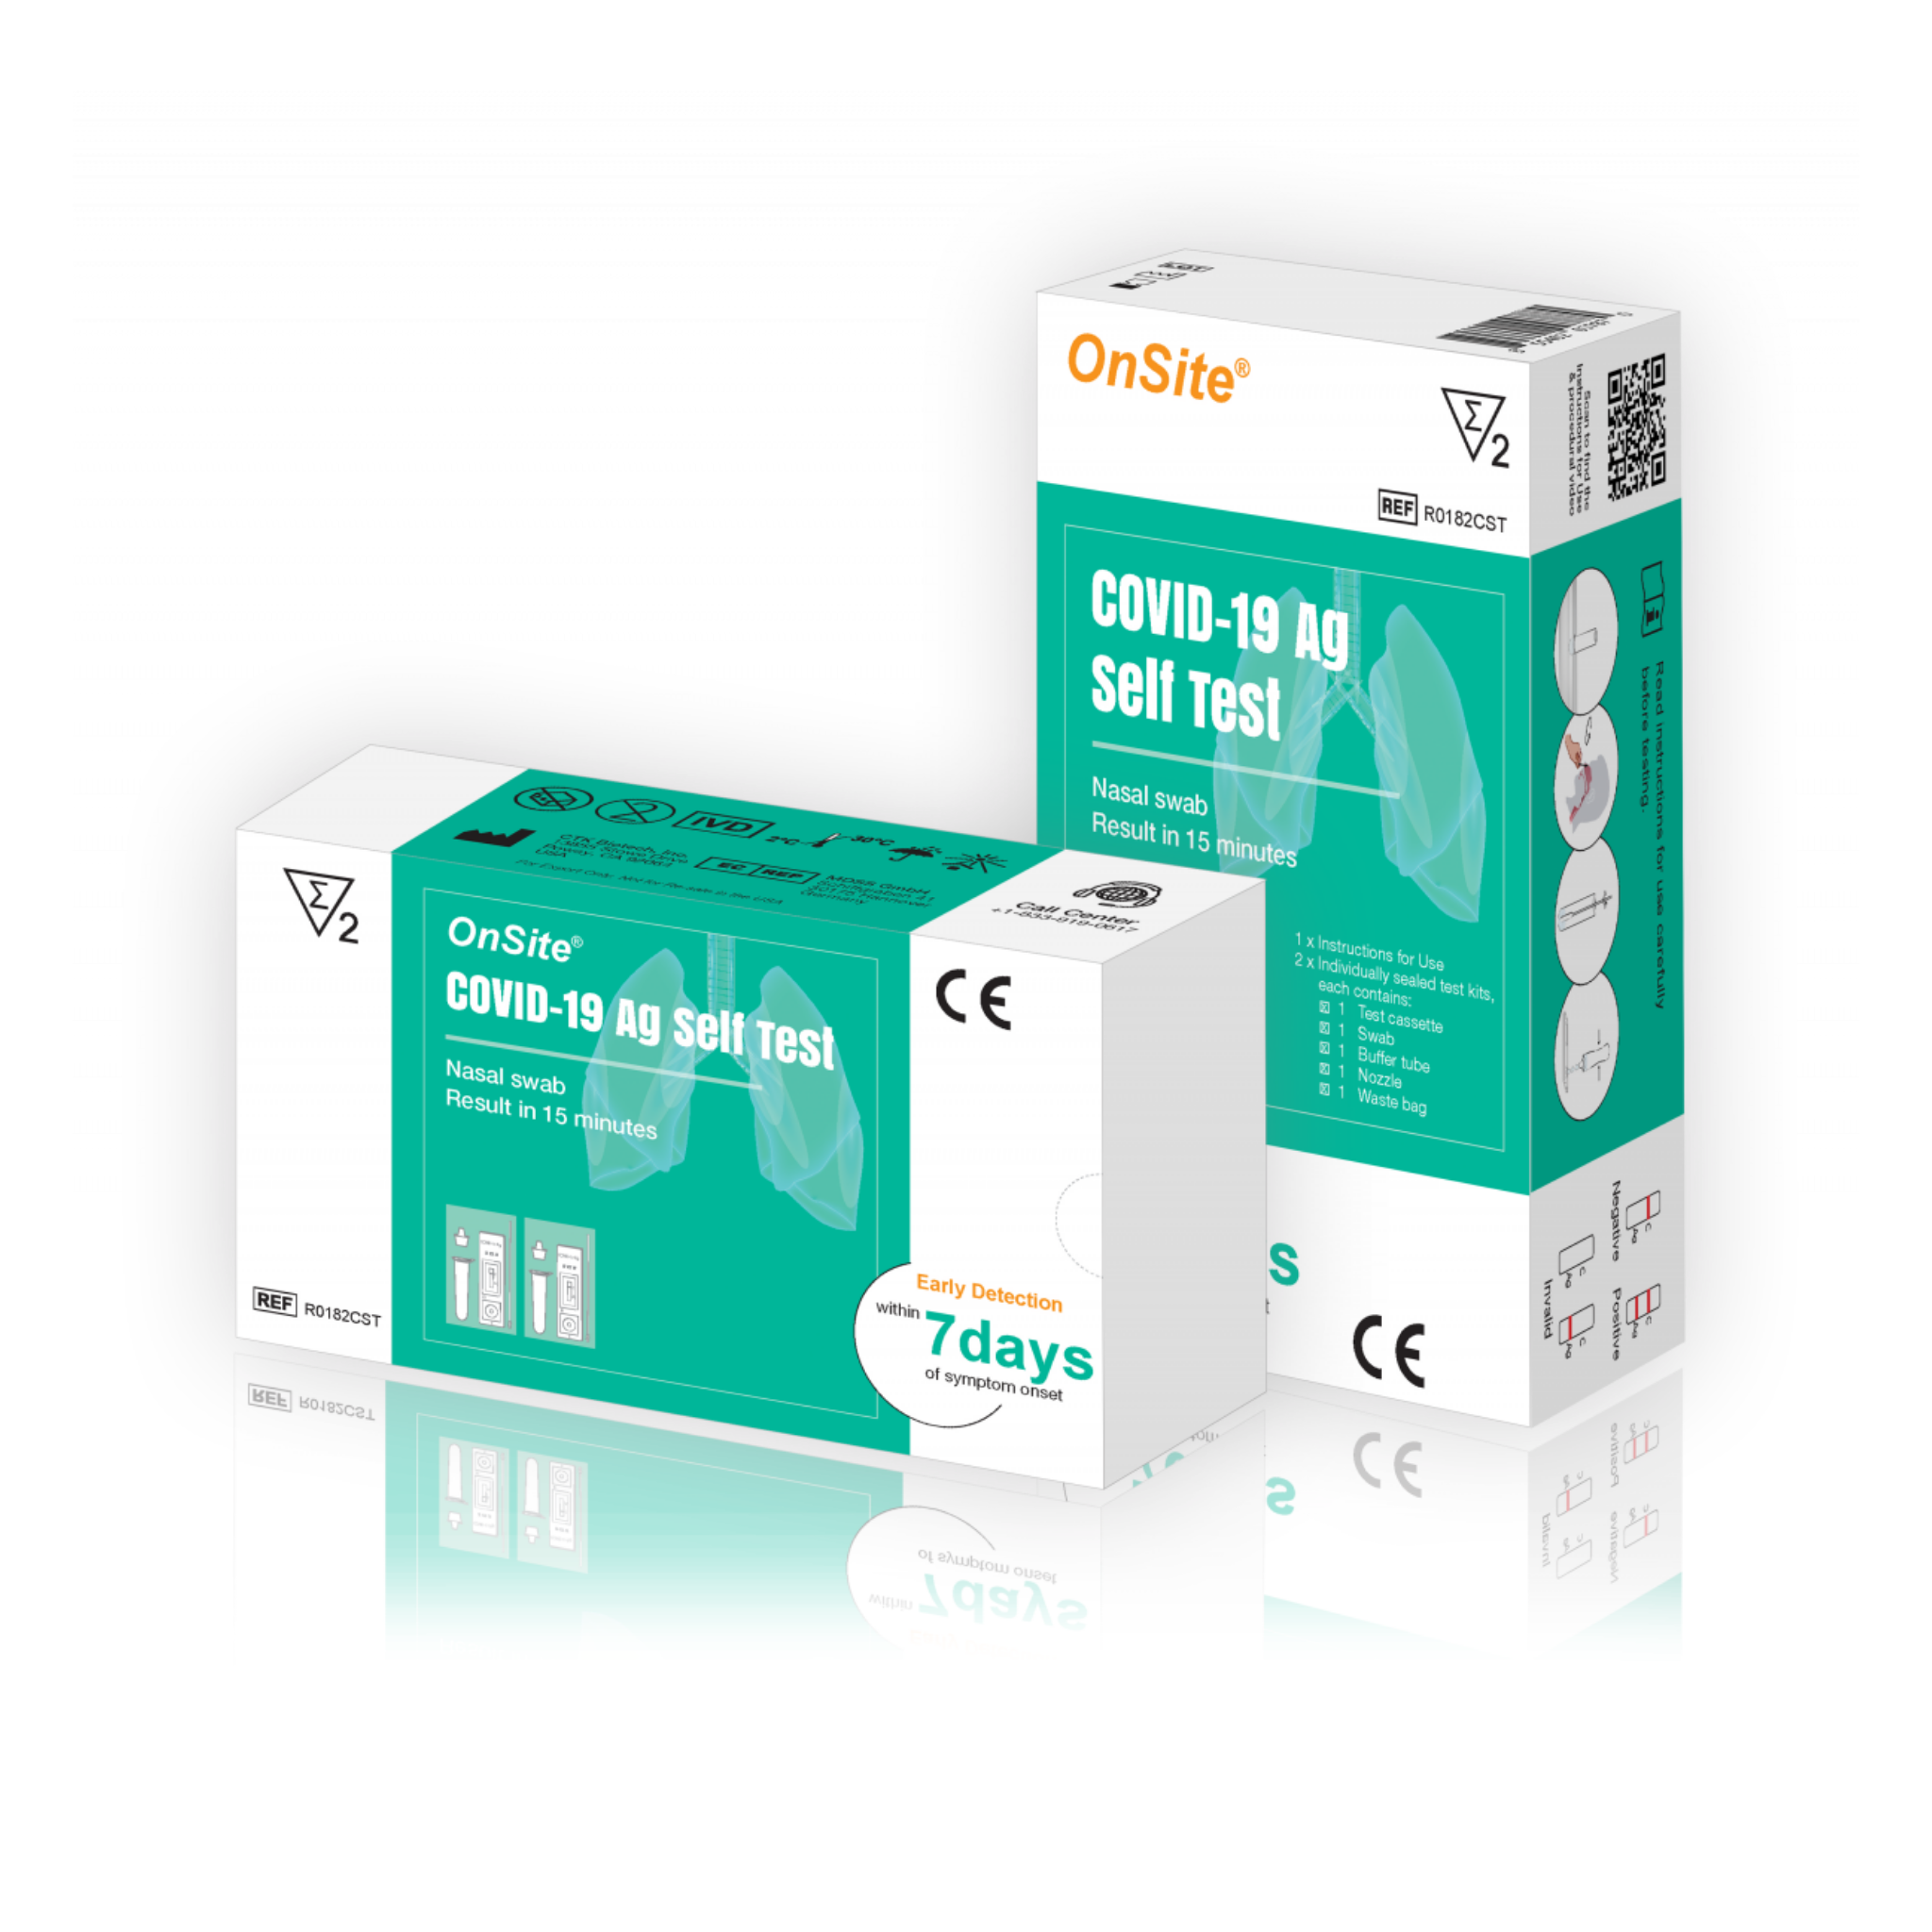 OnSite Covid-19 Antigen Self Test (2 pack)